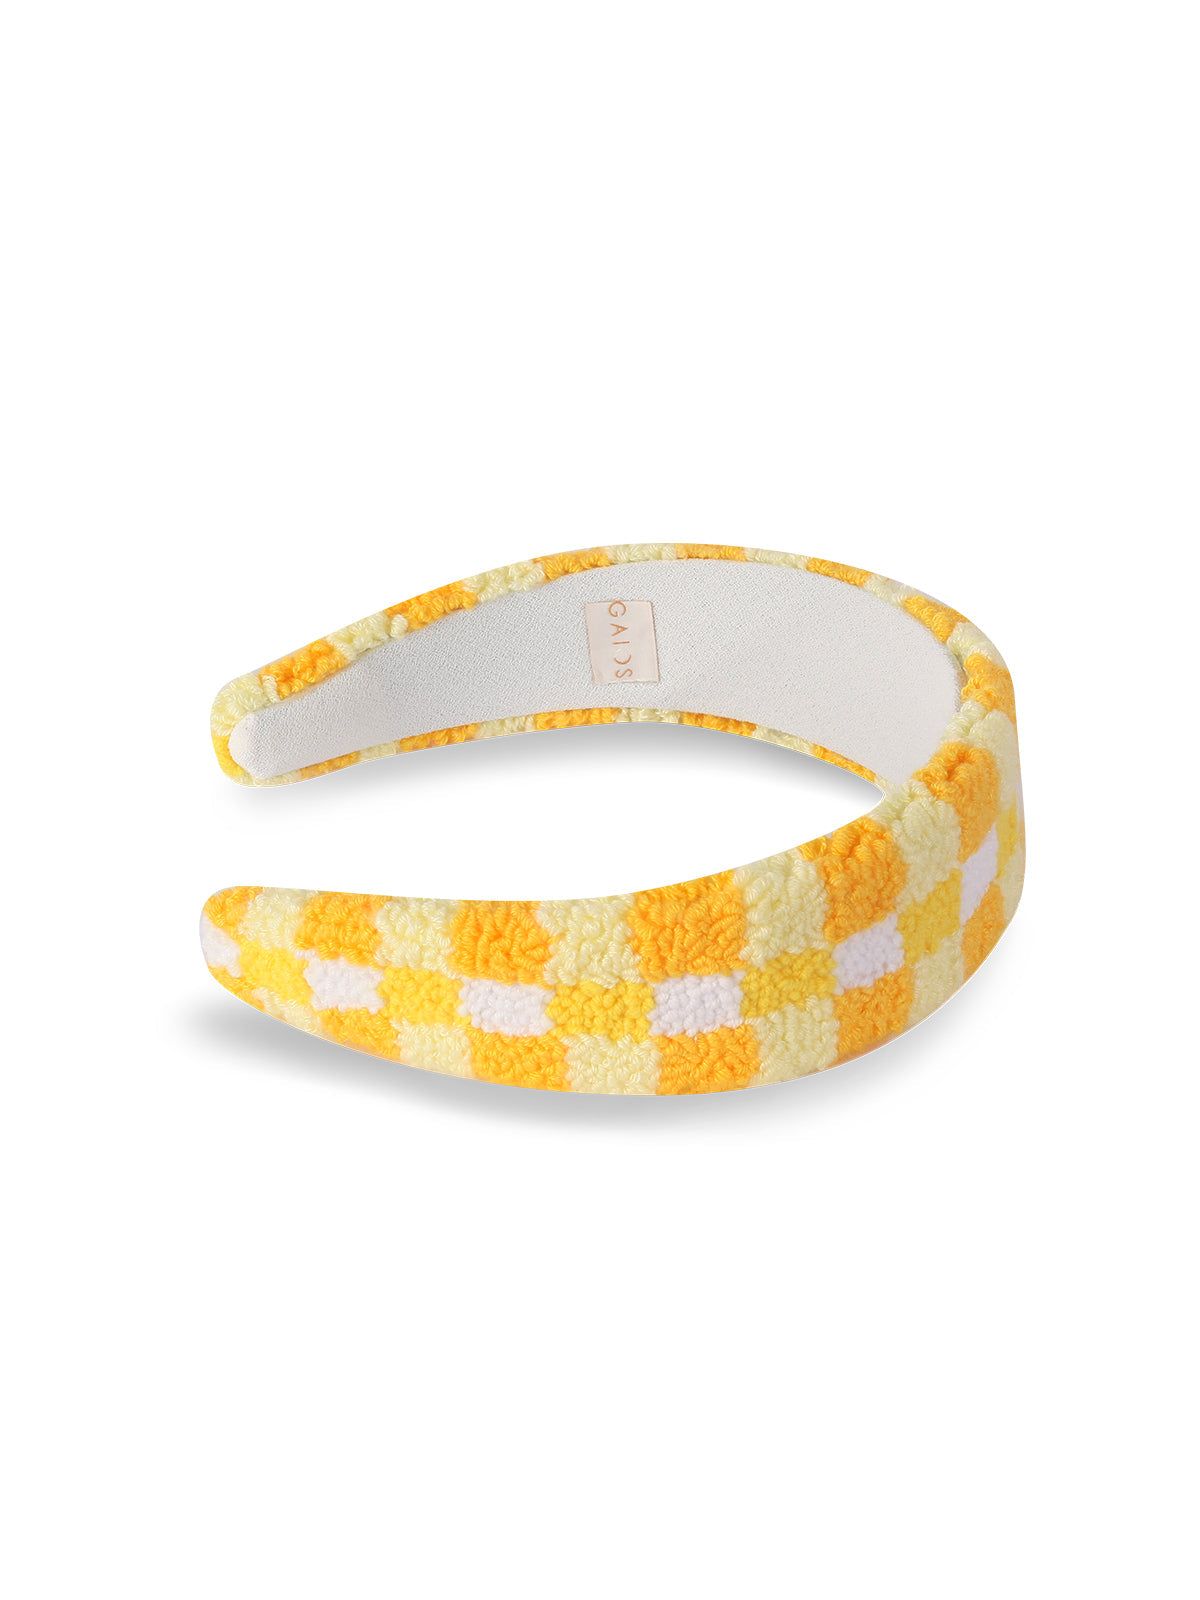 Picnic Yellow Punch Headband